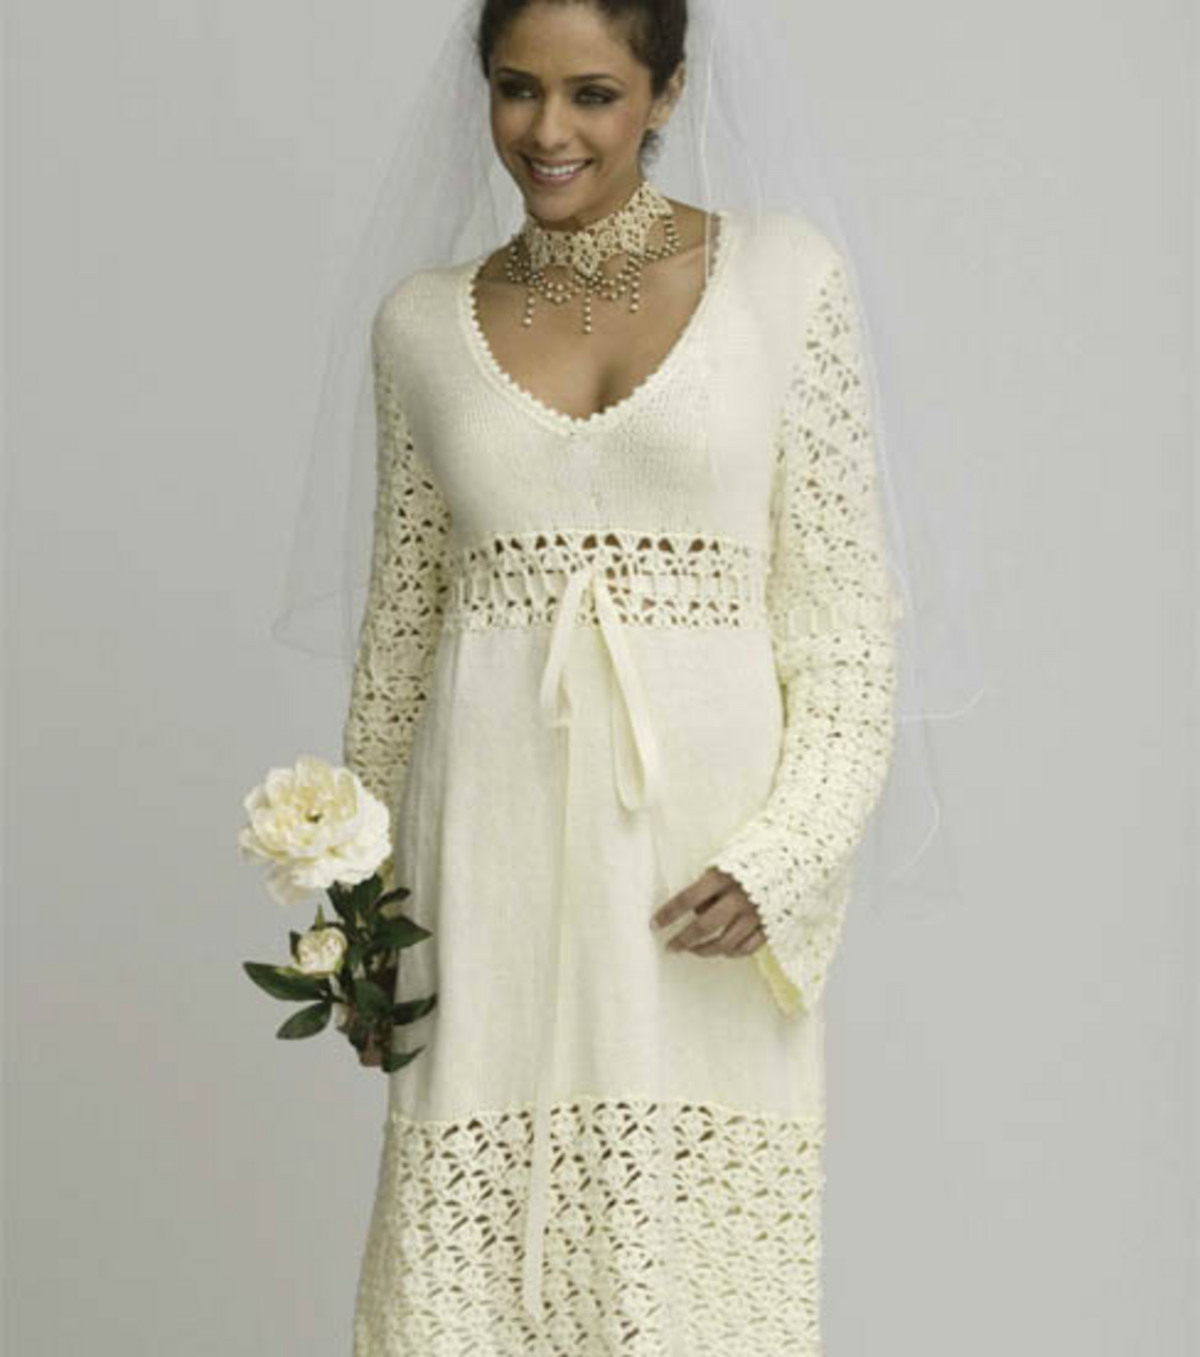 Crochet Wedding Dress Pattern Crochet Wedding Dress Patterns And Wedding Accessories To Crochet